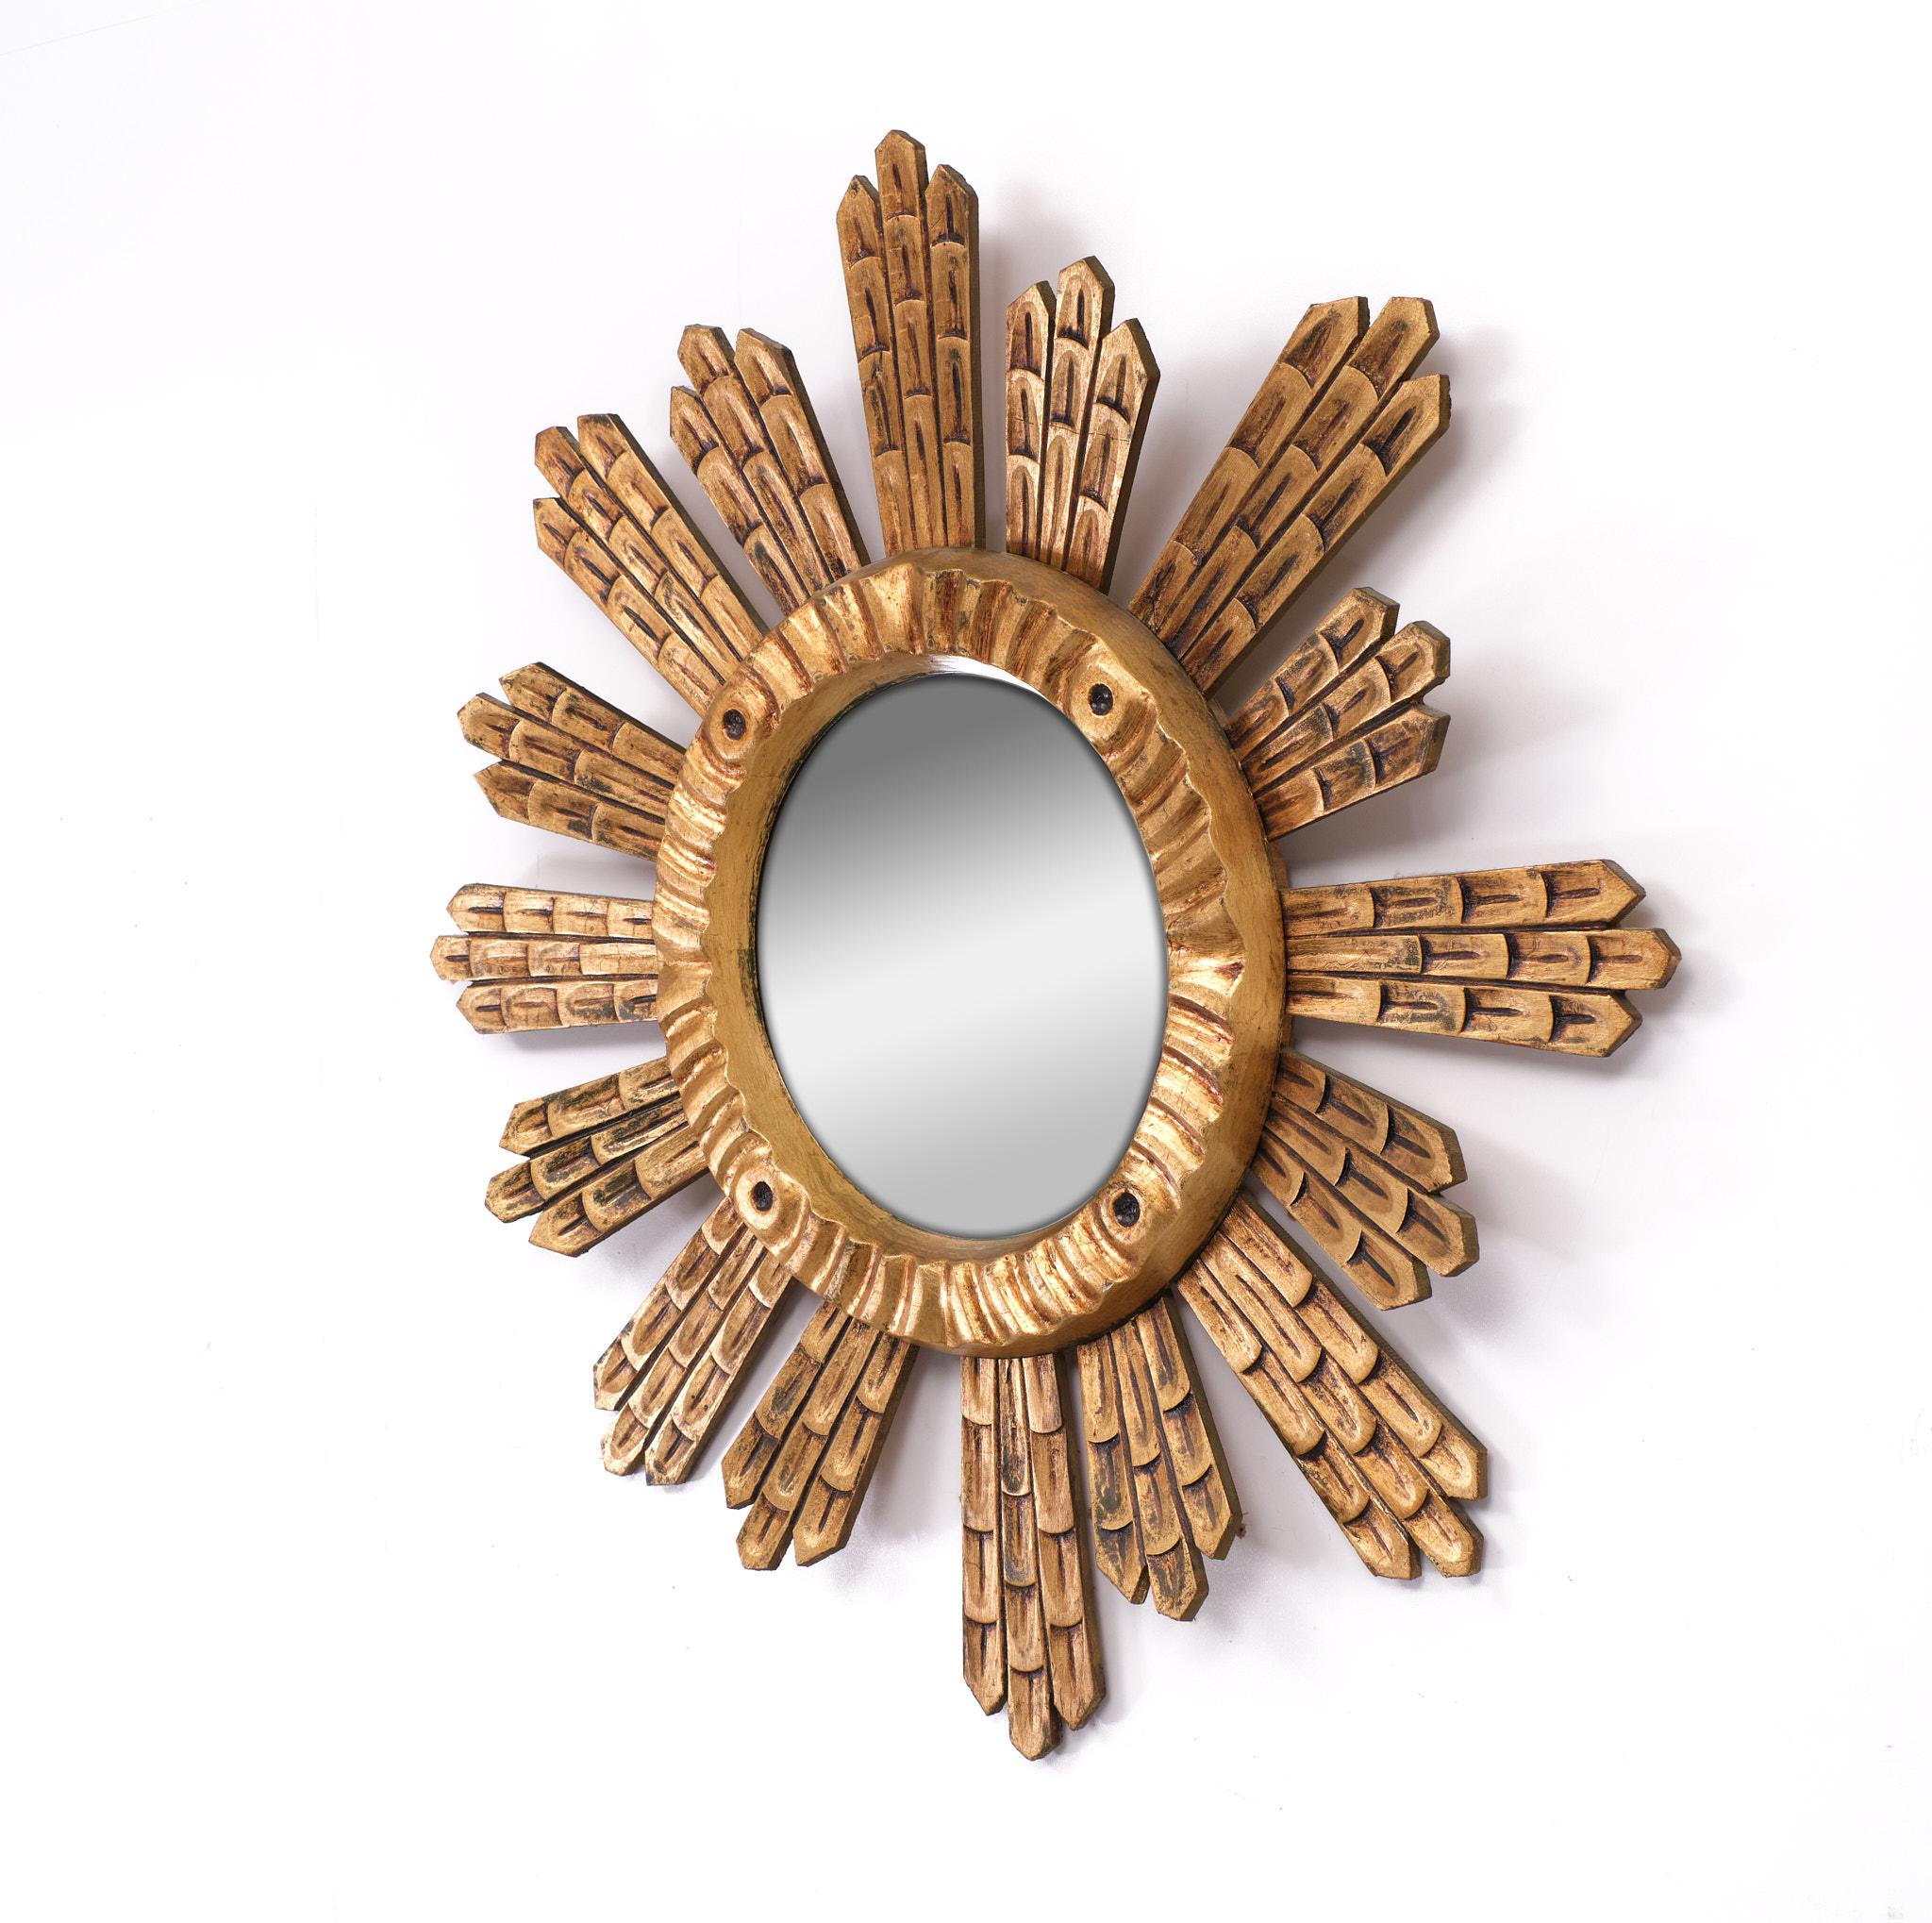 Very nice Sunburst Mirror. Gilded Gold Wood  . So decorative .
1970s  